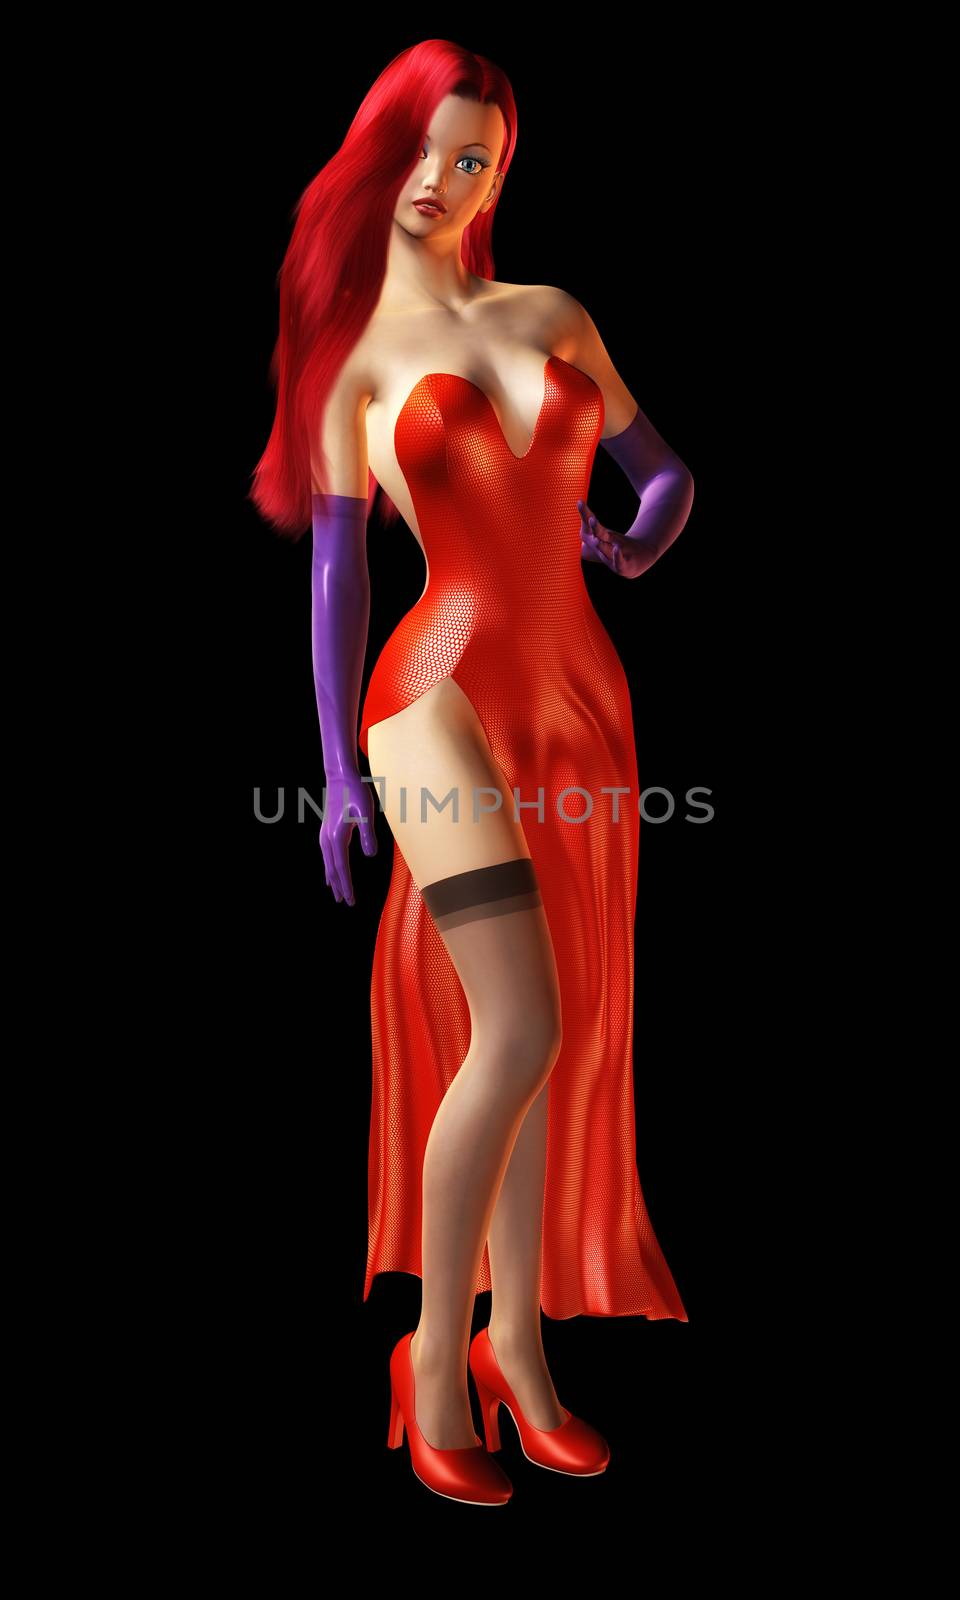 Digital 3D Illustration of a glamorous Female